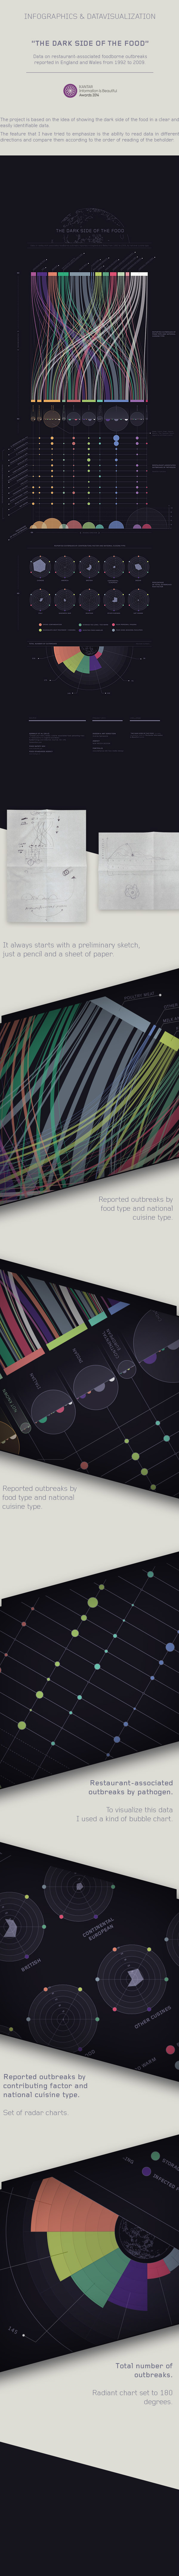 Data Viz data visualization storytelling   information design infographic Food  poison Dark side outbreaks